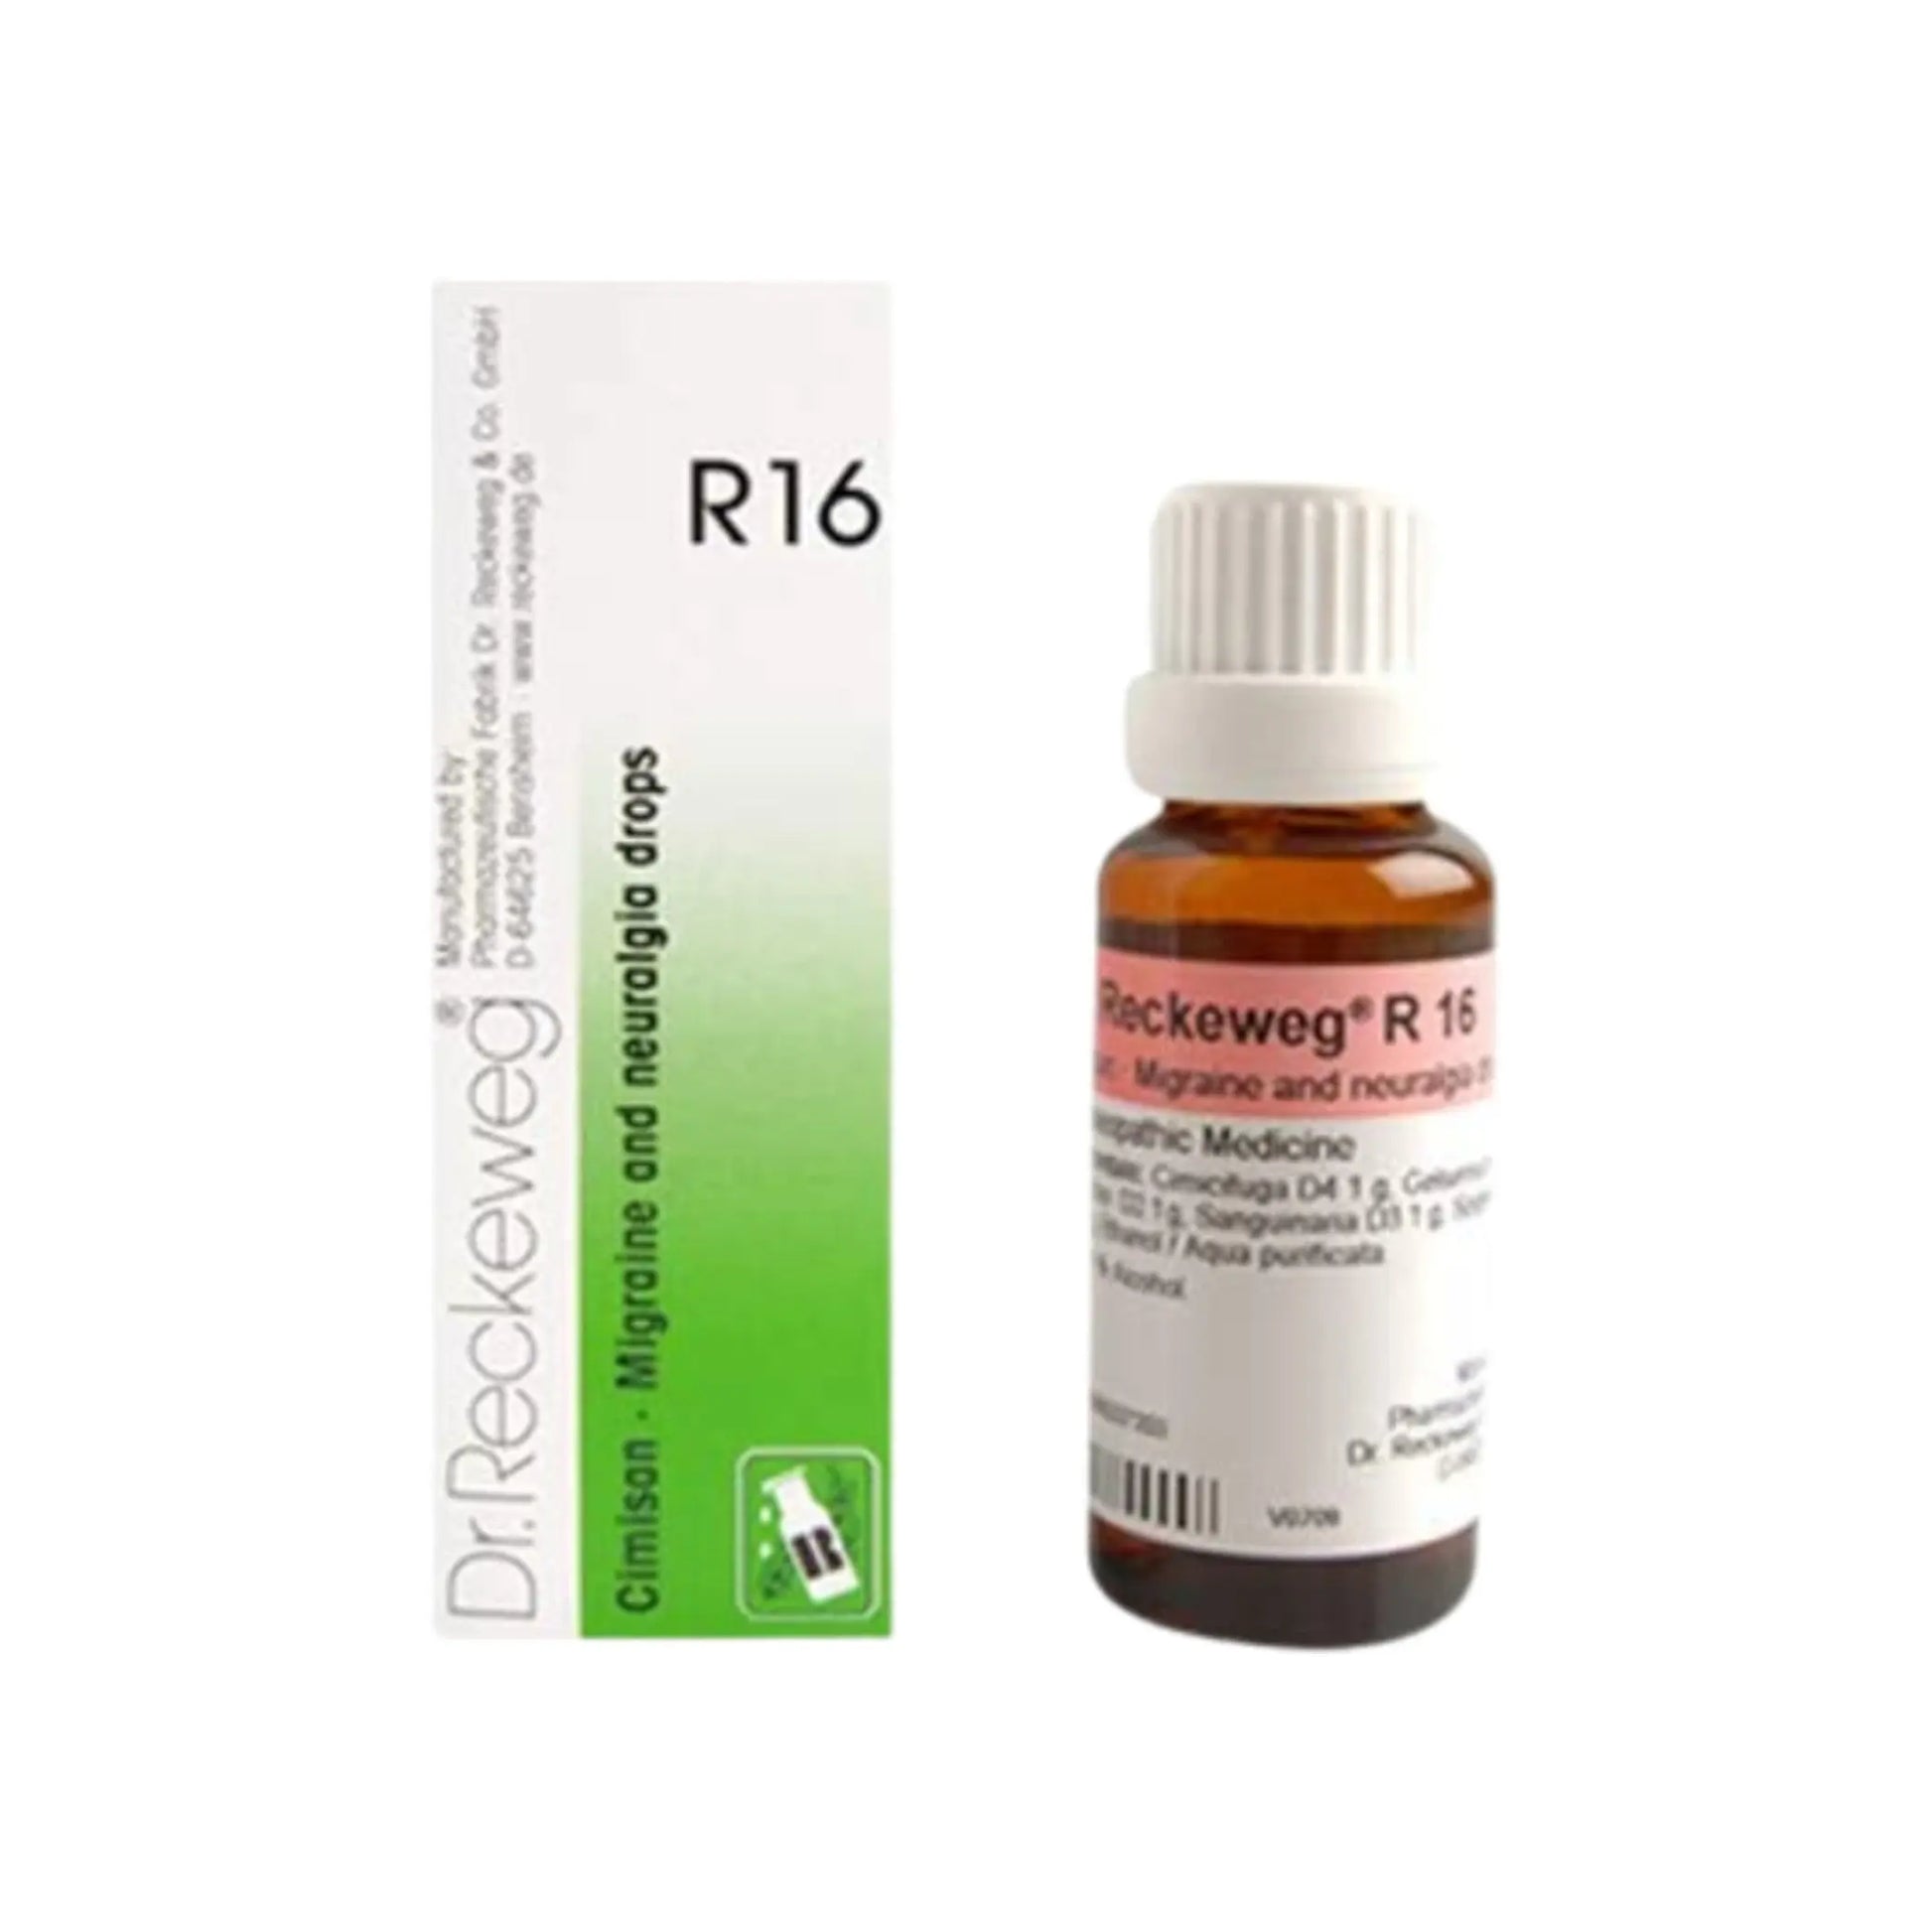 Dr. Reckeweg R16 - Migraine and Headache Drops 22 ml - my-ayurvedic